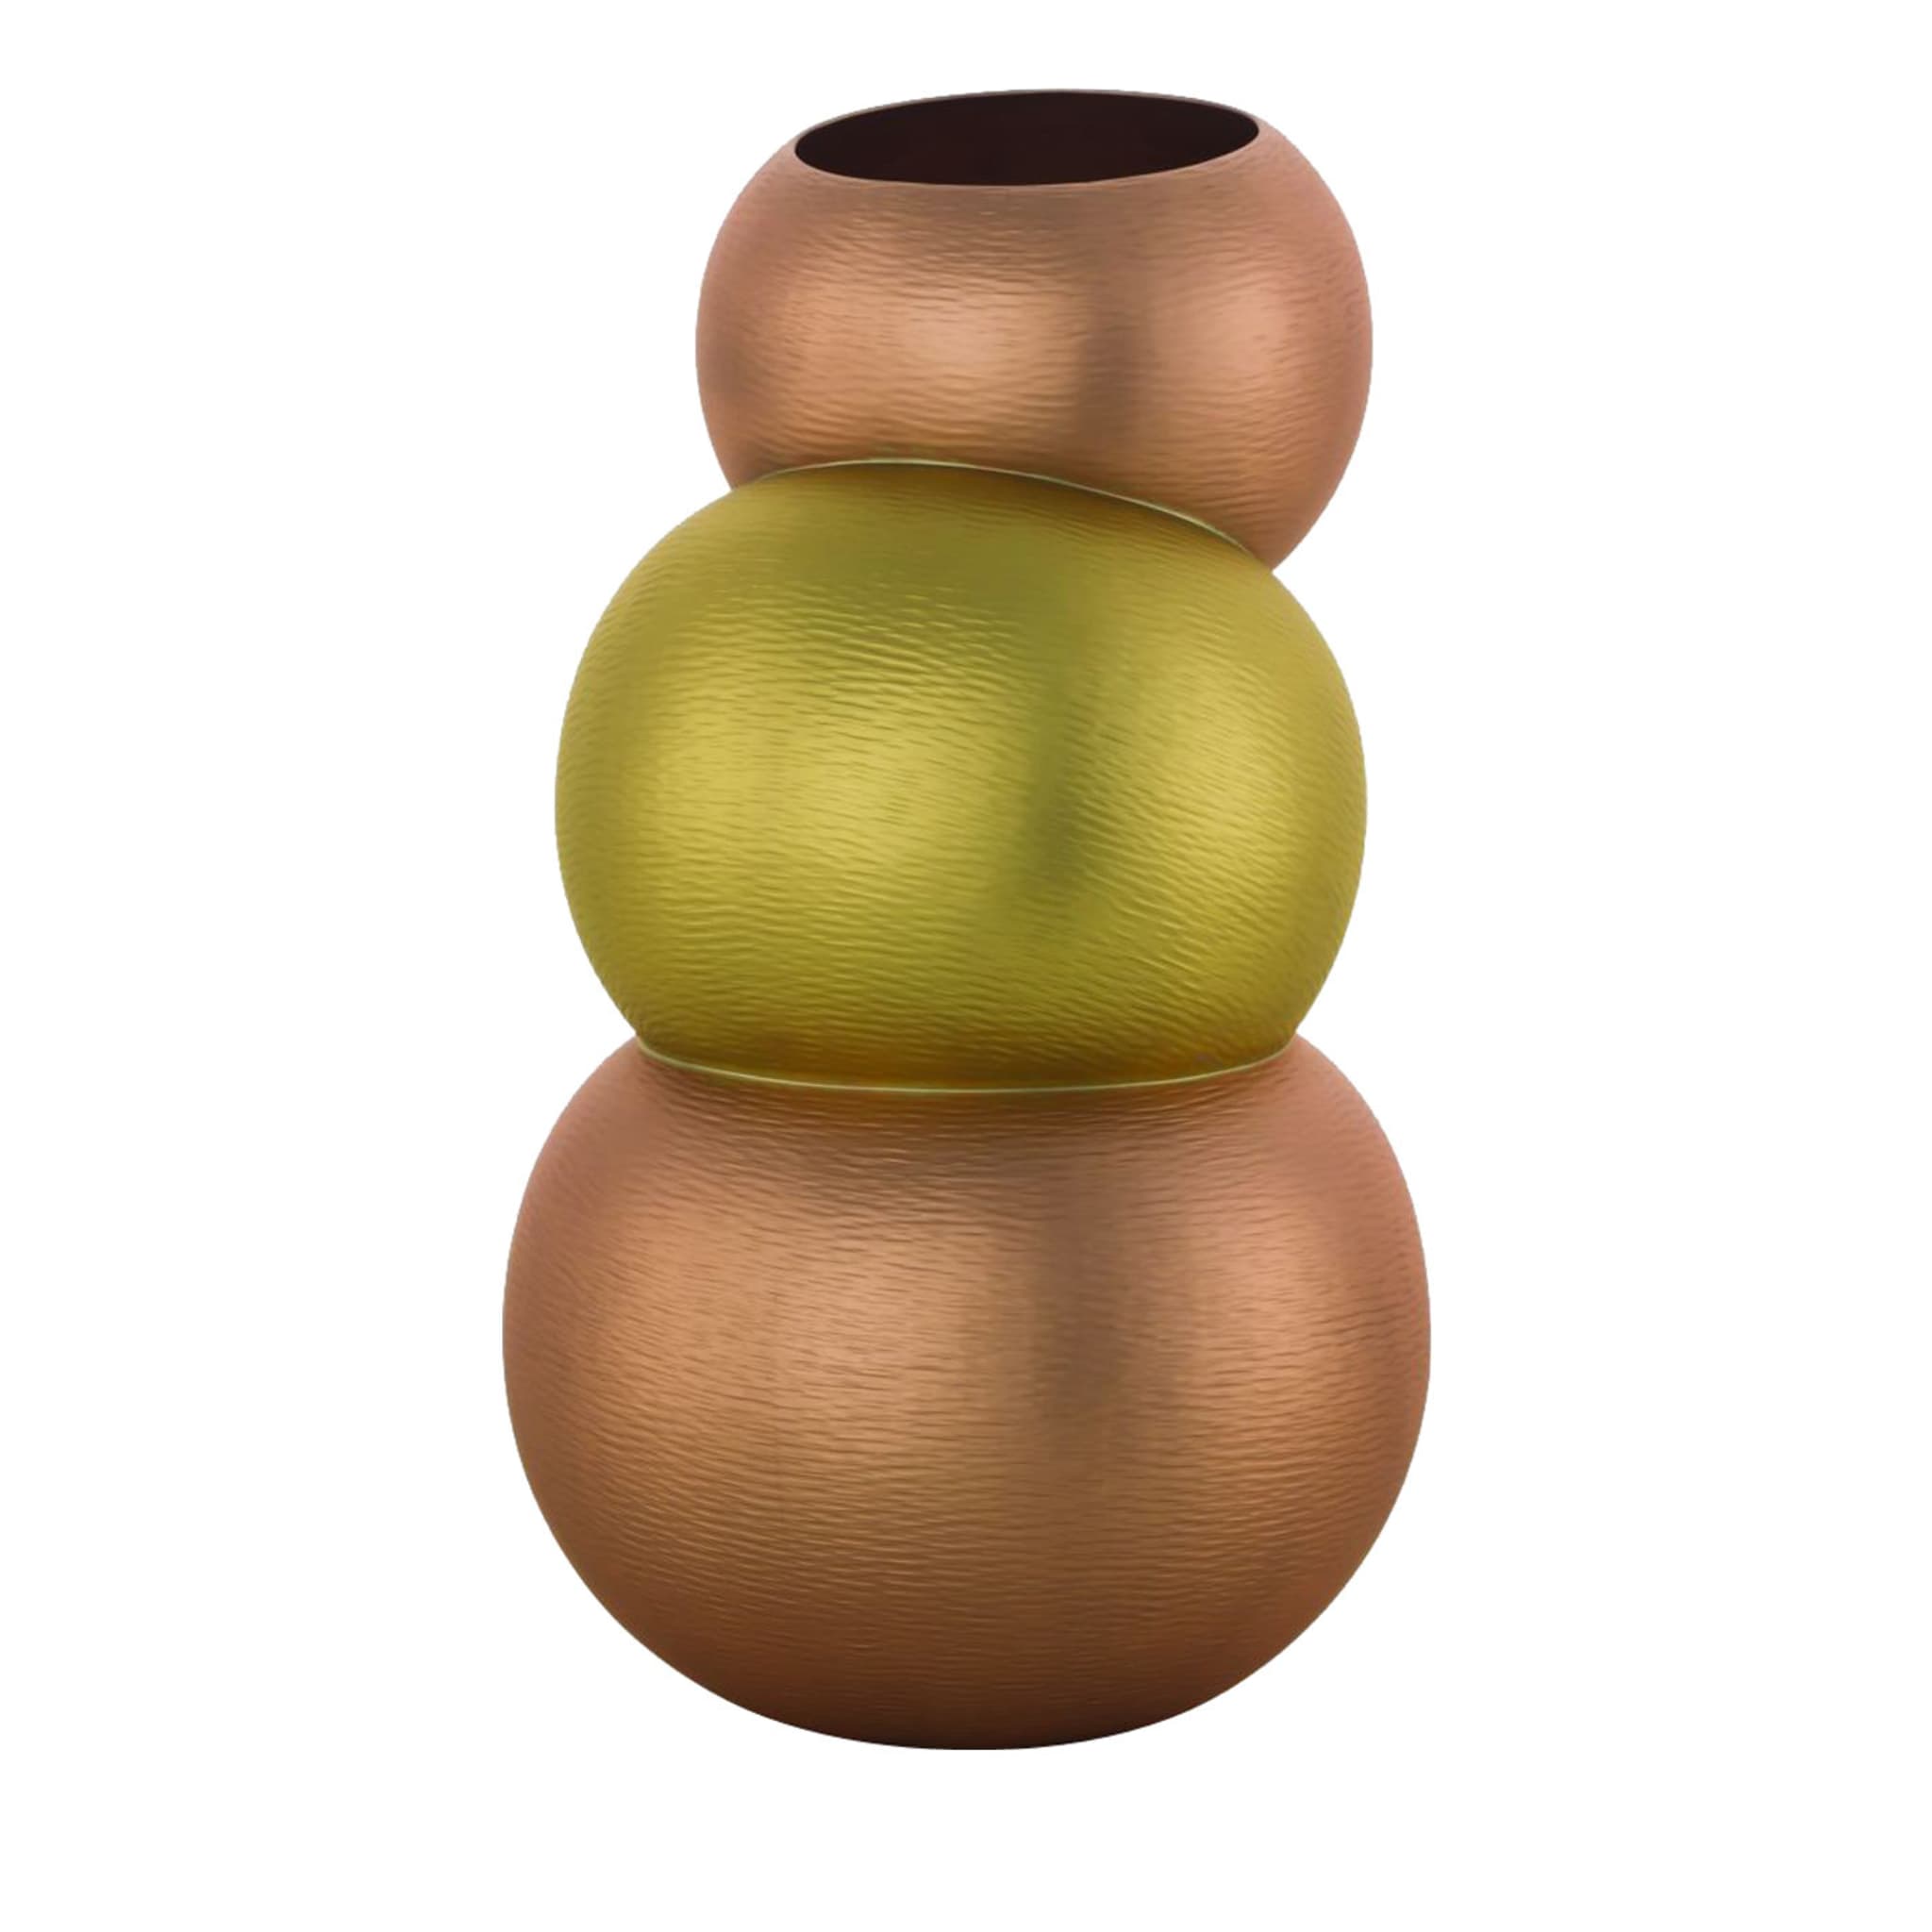 Equilibri-Vase - Hauptansicht